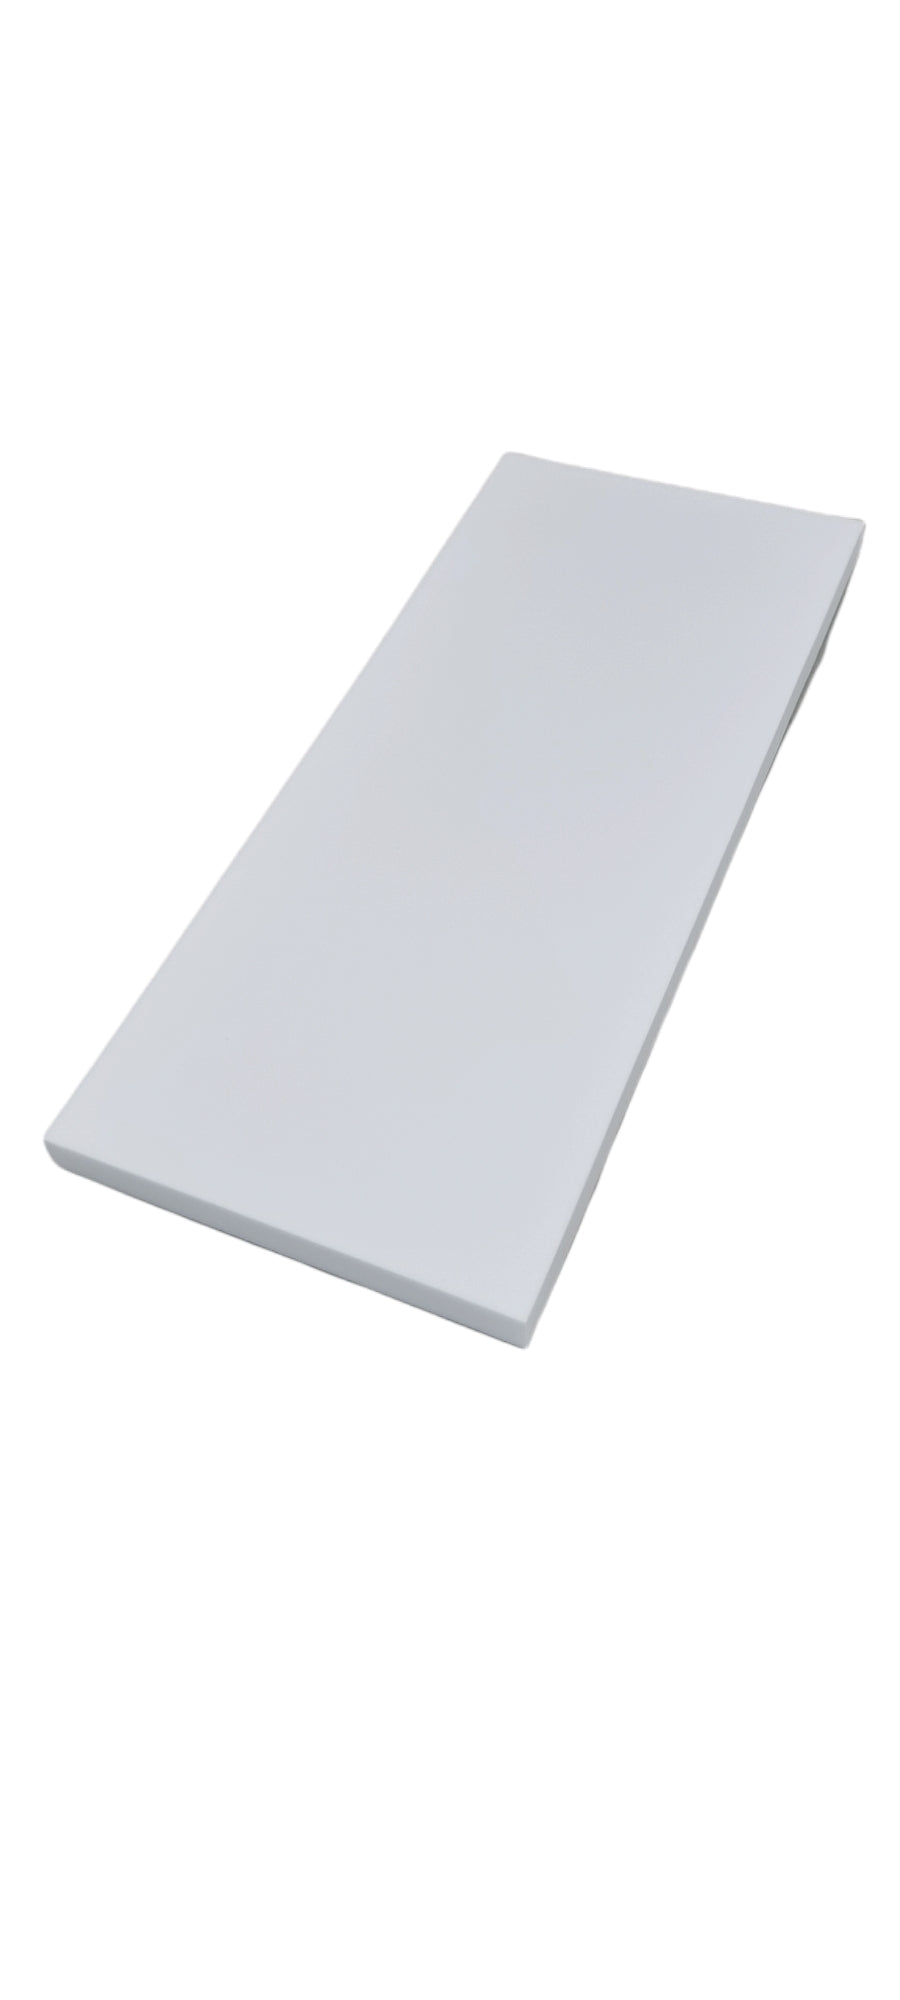 Pro-coustix Melaflex Ceiling Panels Baffles Flat 1200x500x30mm